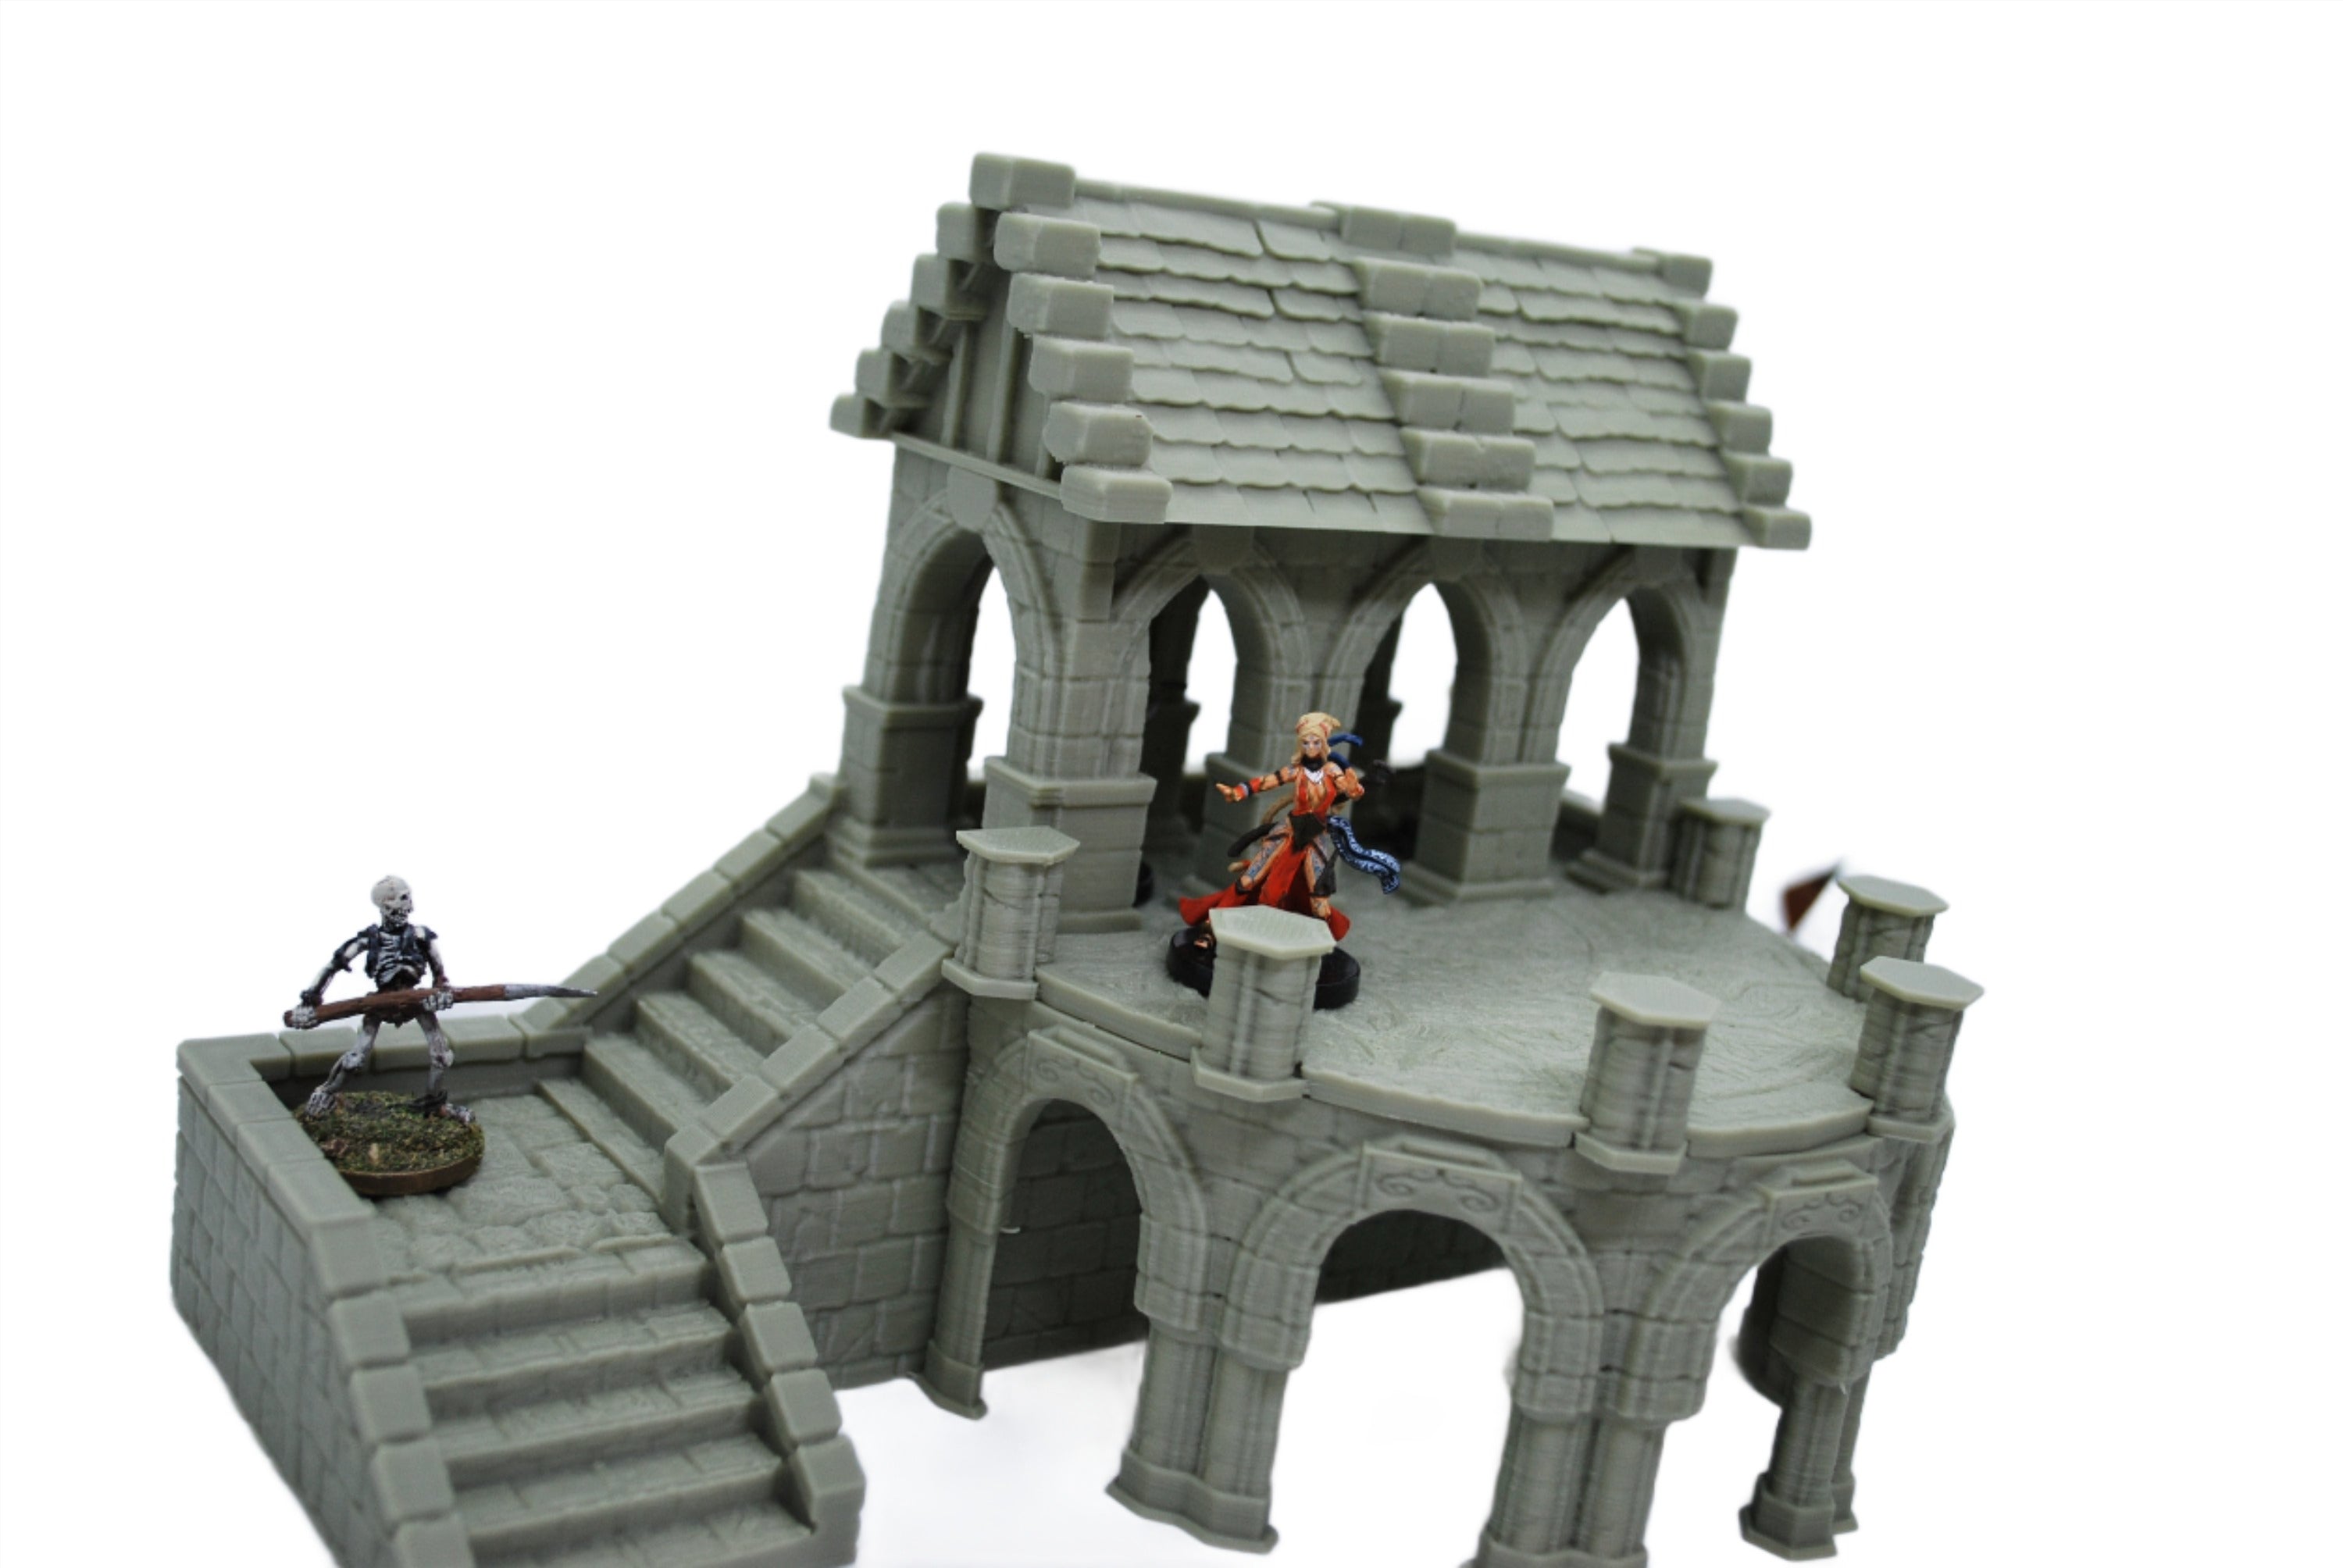 Stormguard - Chapel / 28mm Wargame / RPG 3d Printed Tabletop Terrain